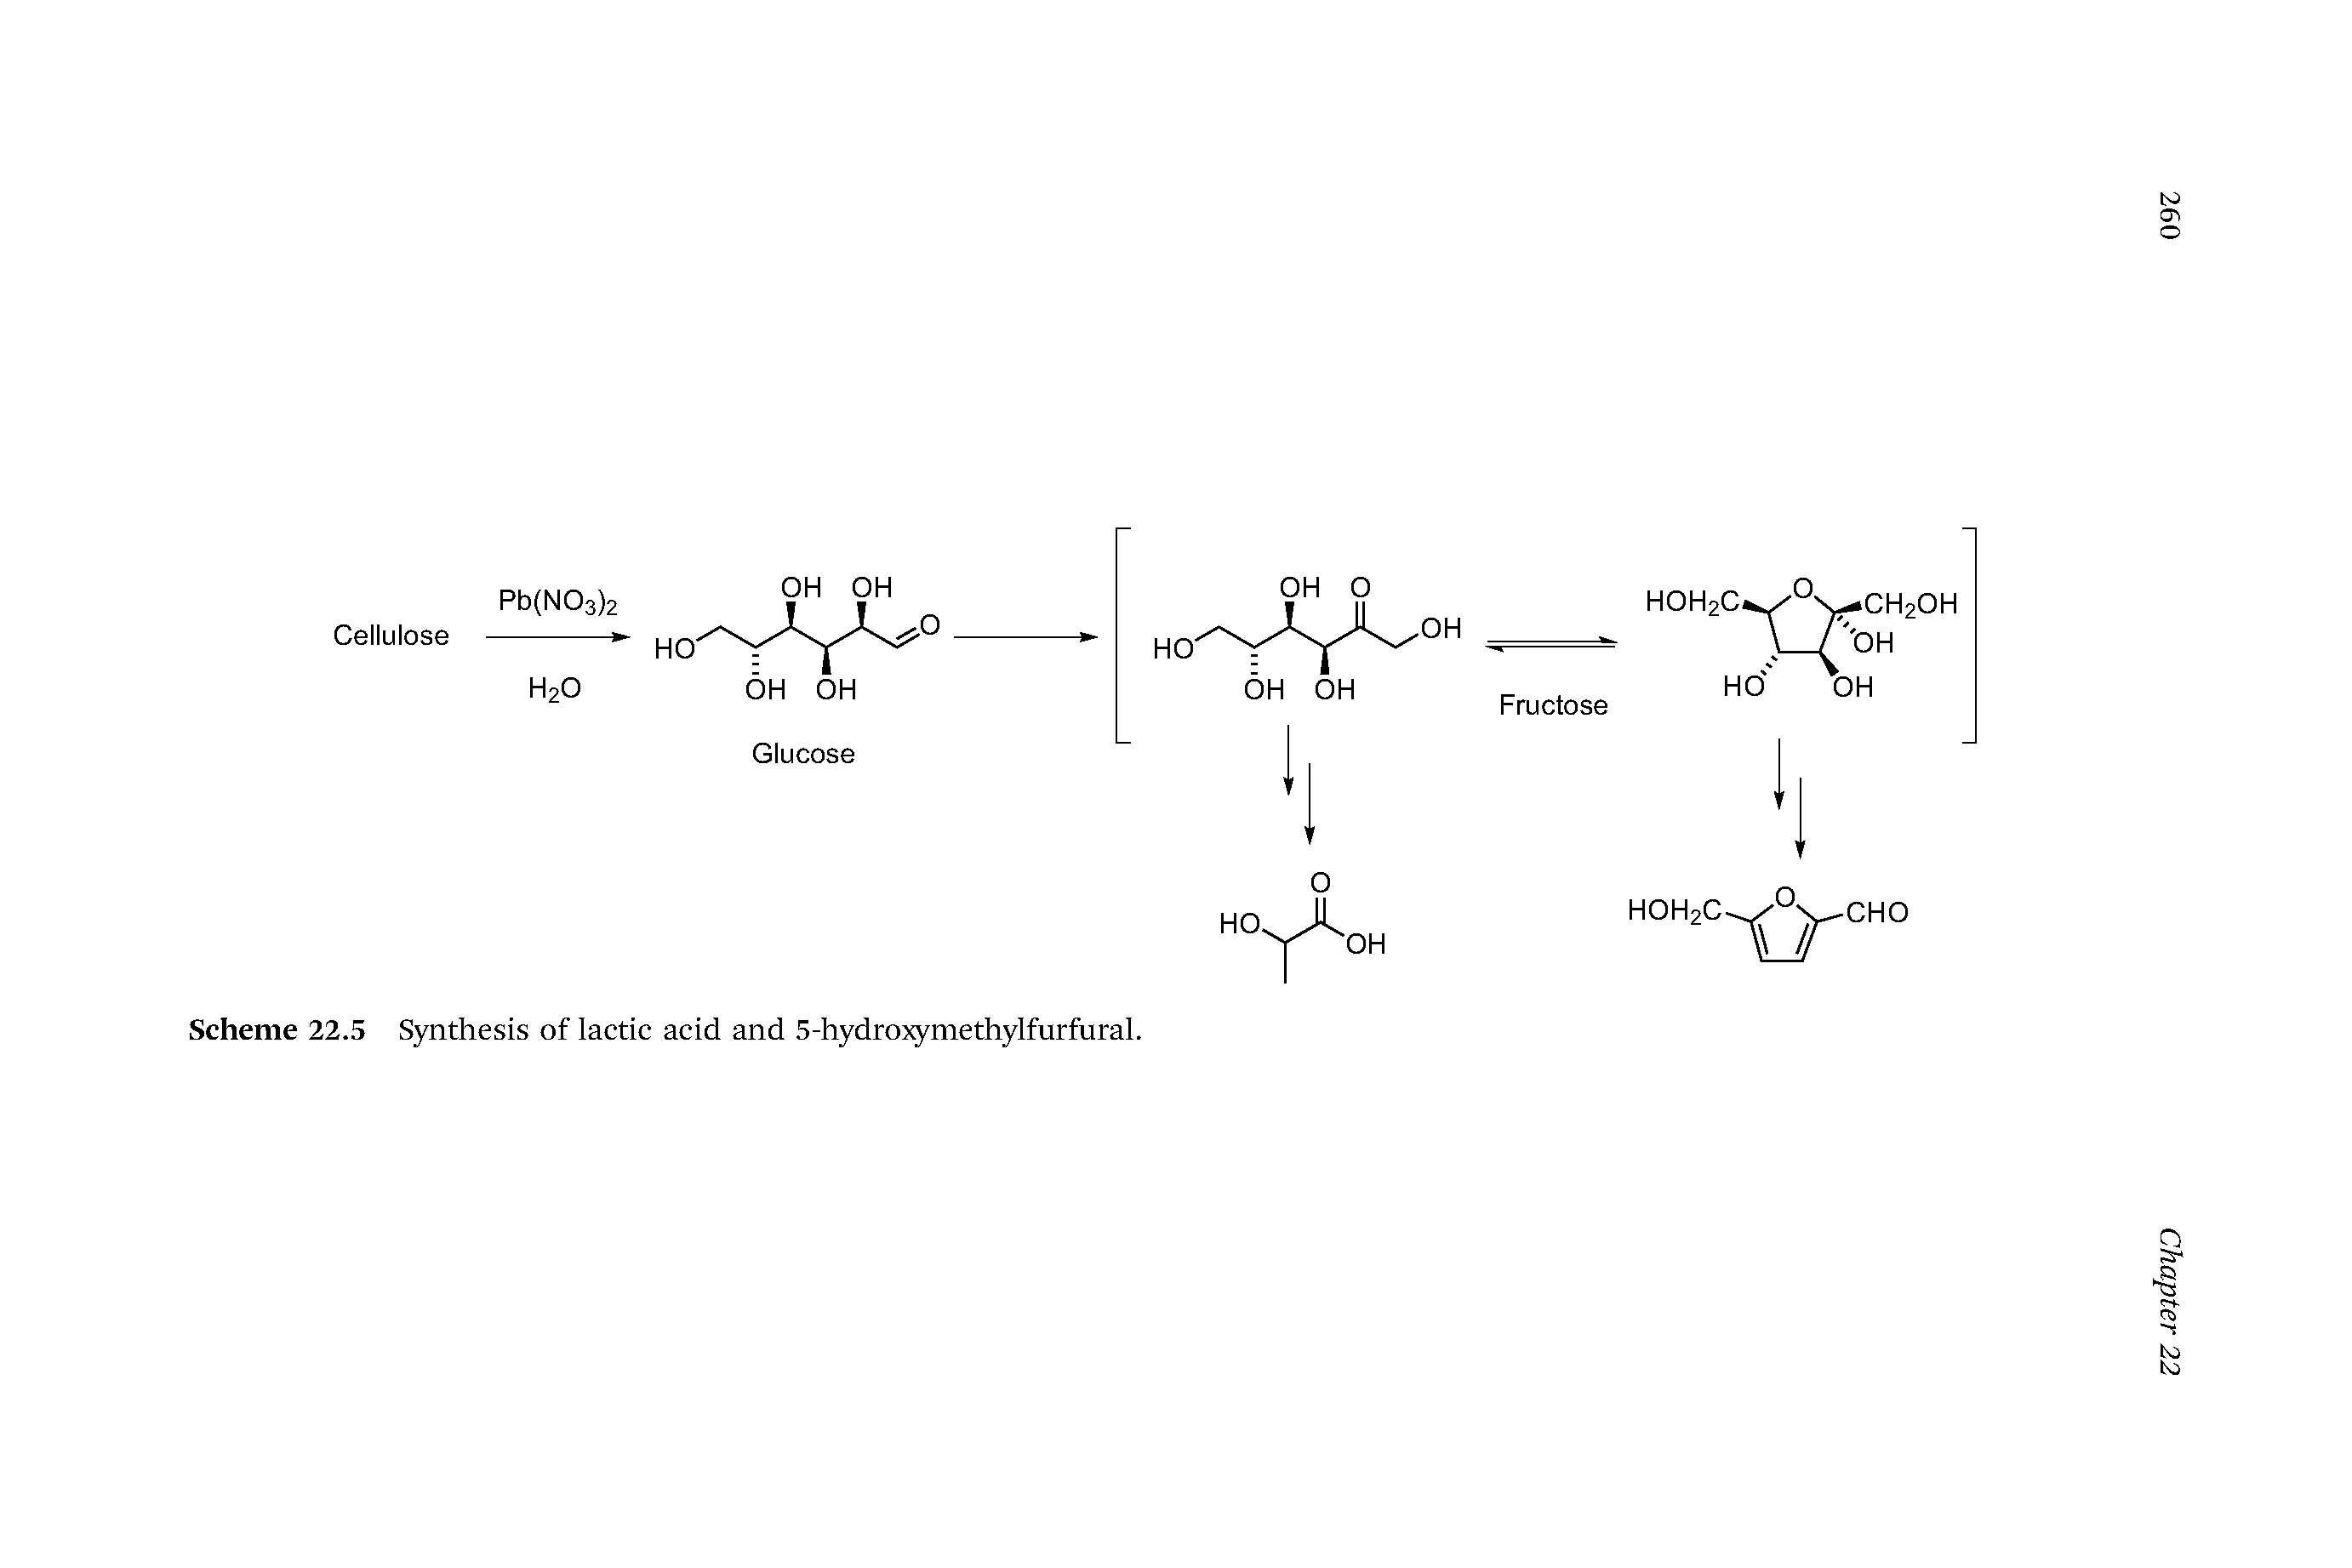 Scheme 22.5 Synthesis of lactic acid and 5-hydro5 methylfurfural.